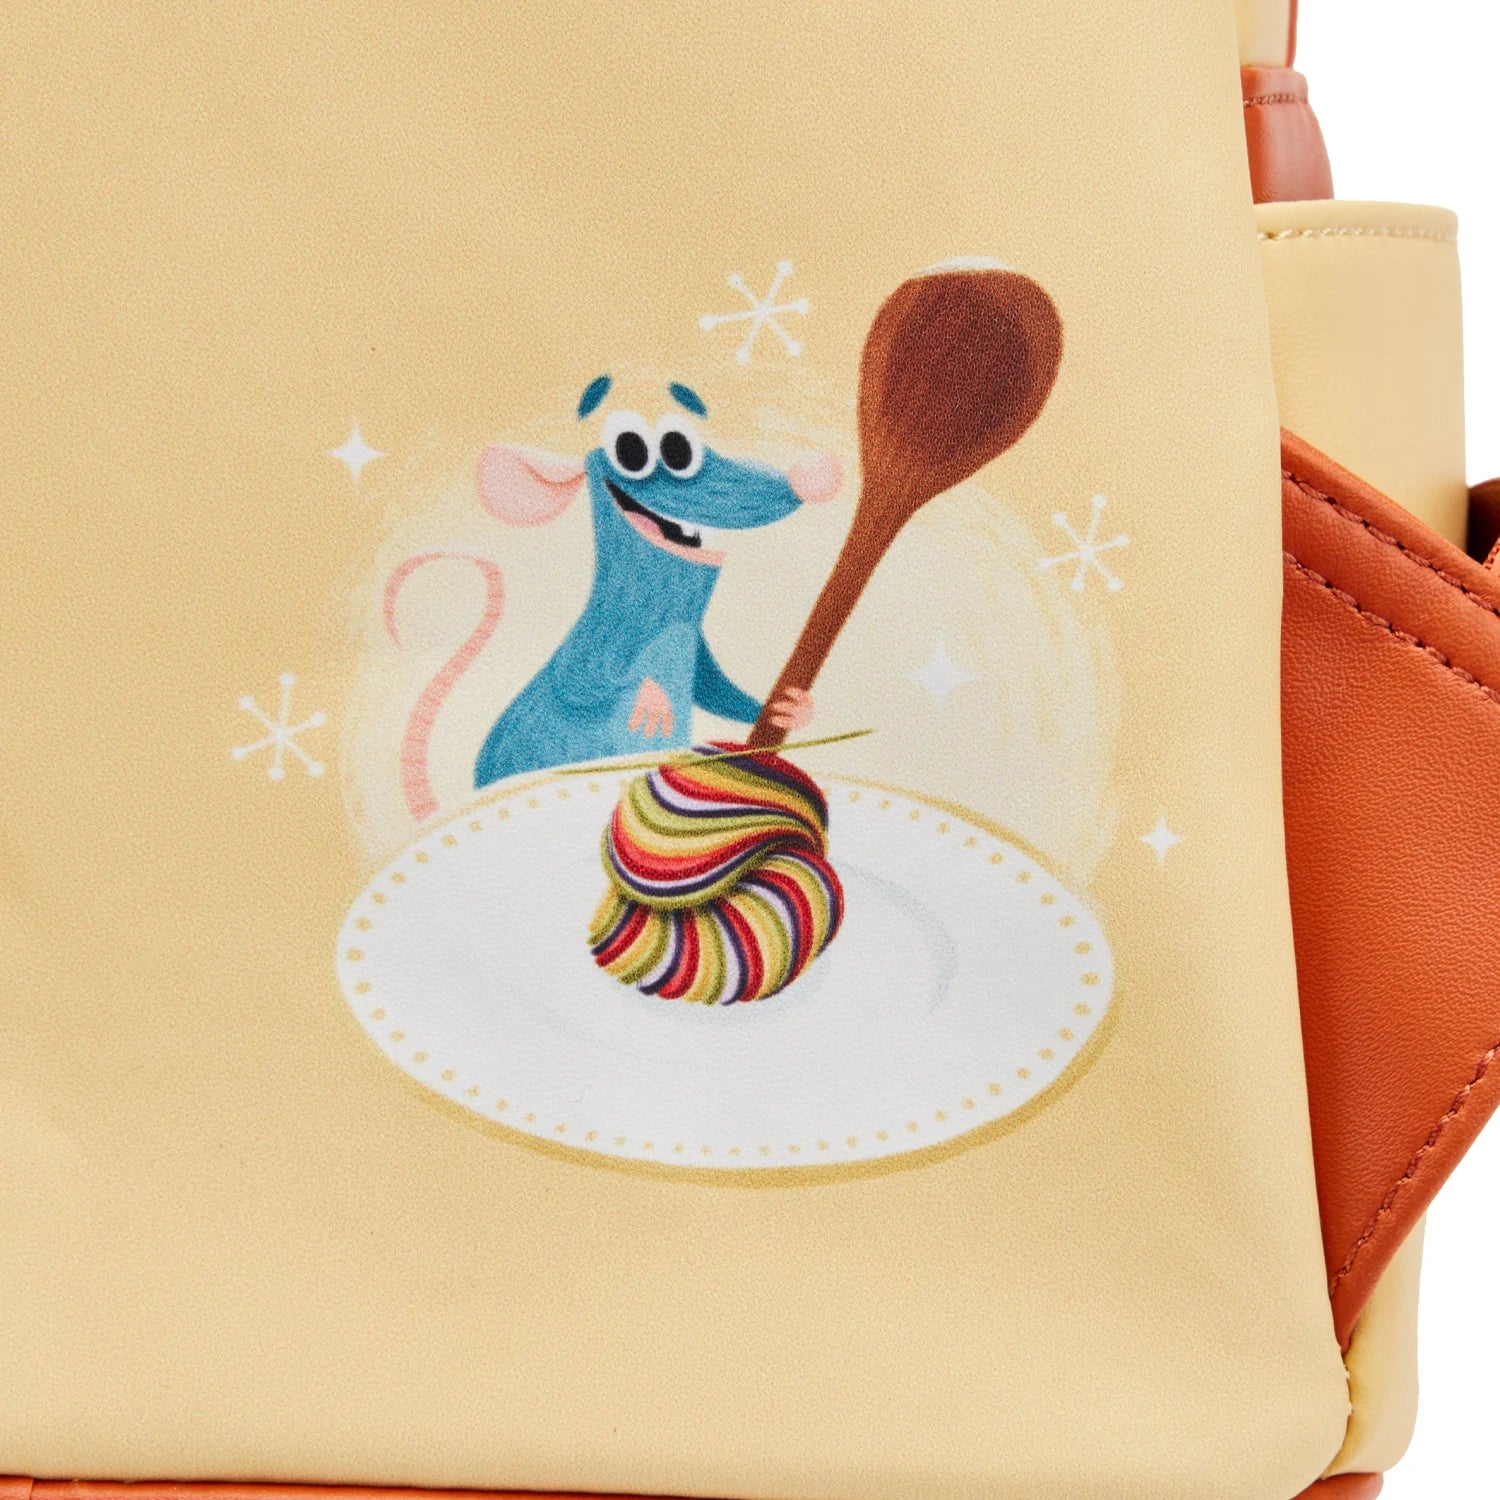 Loungefly Disney Pixar Moments Ratatouille Cooking Pot Mini Backpack